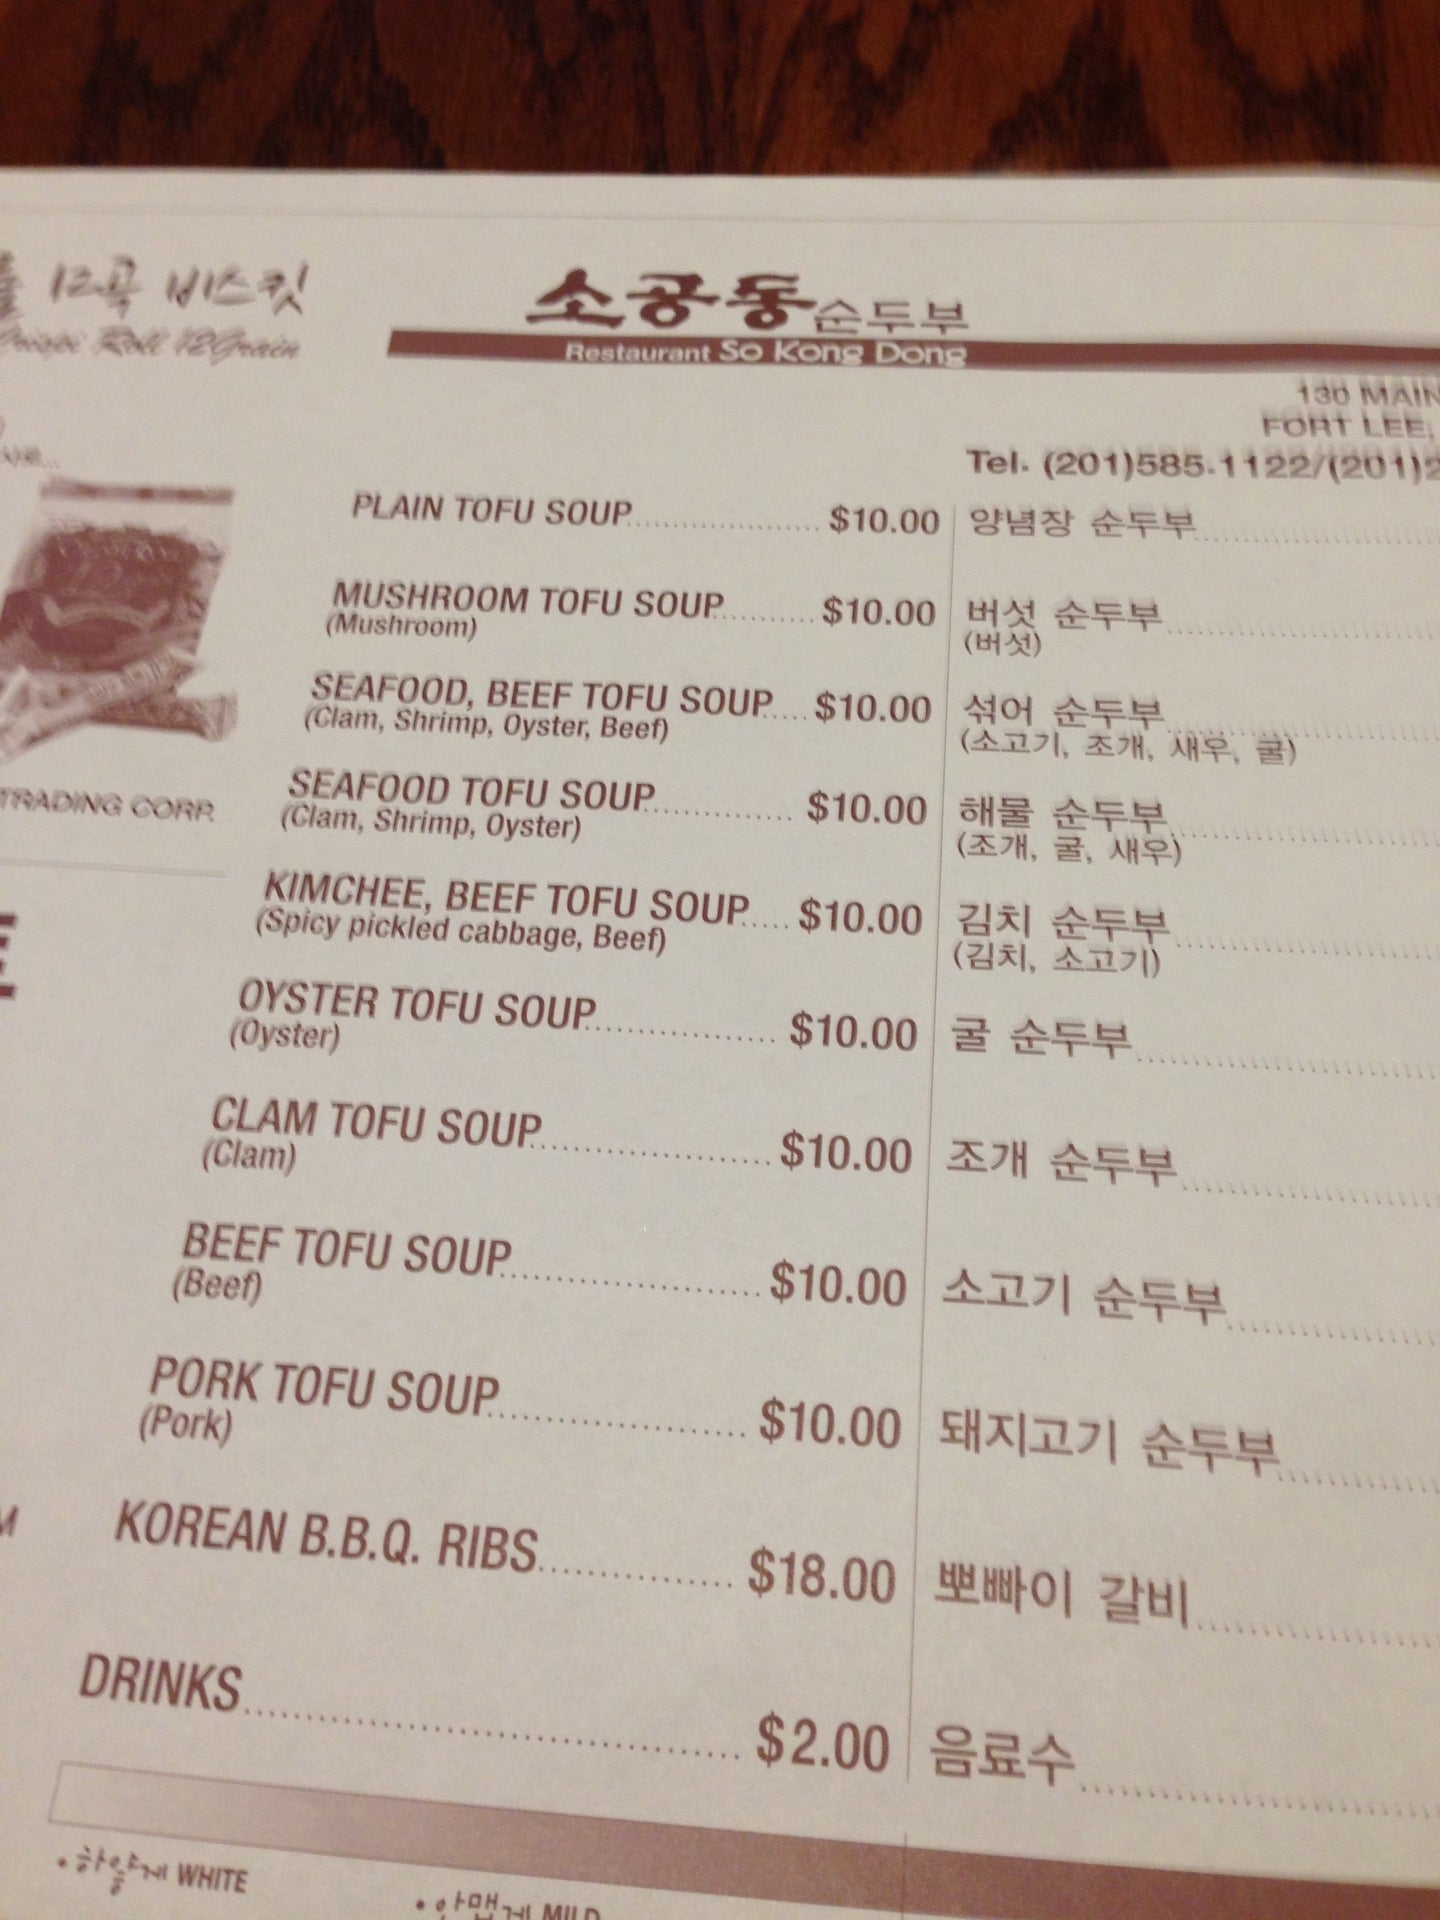 So Kong Dong Restaurant